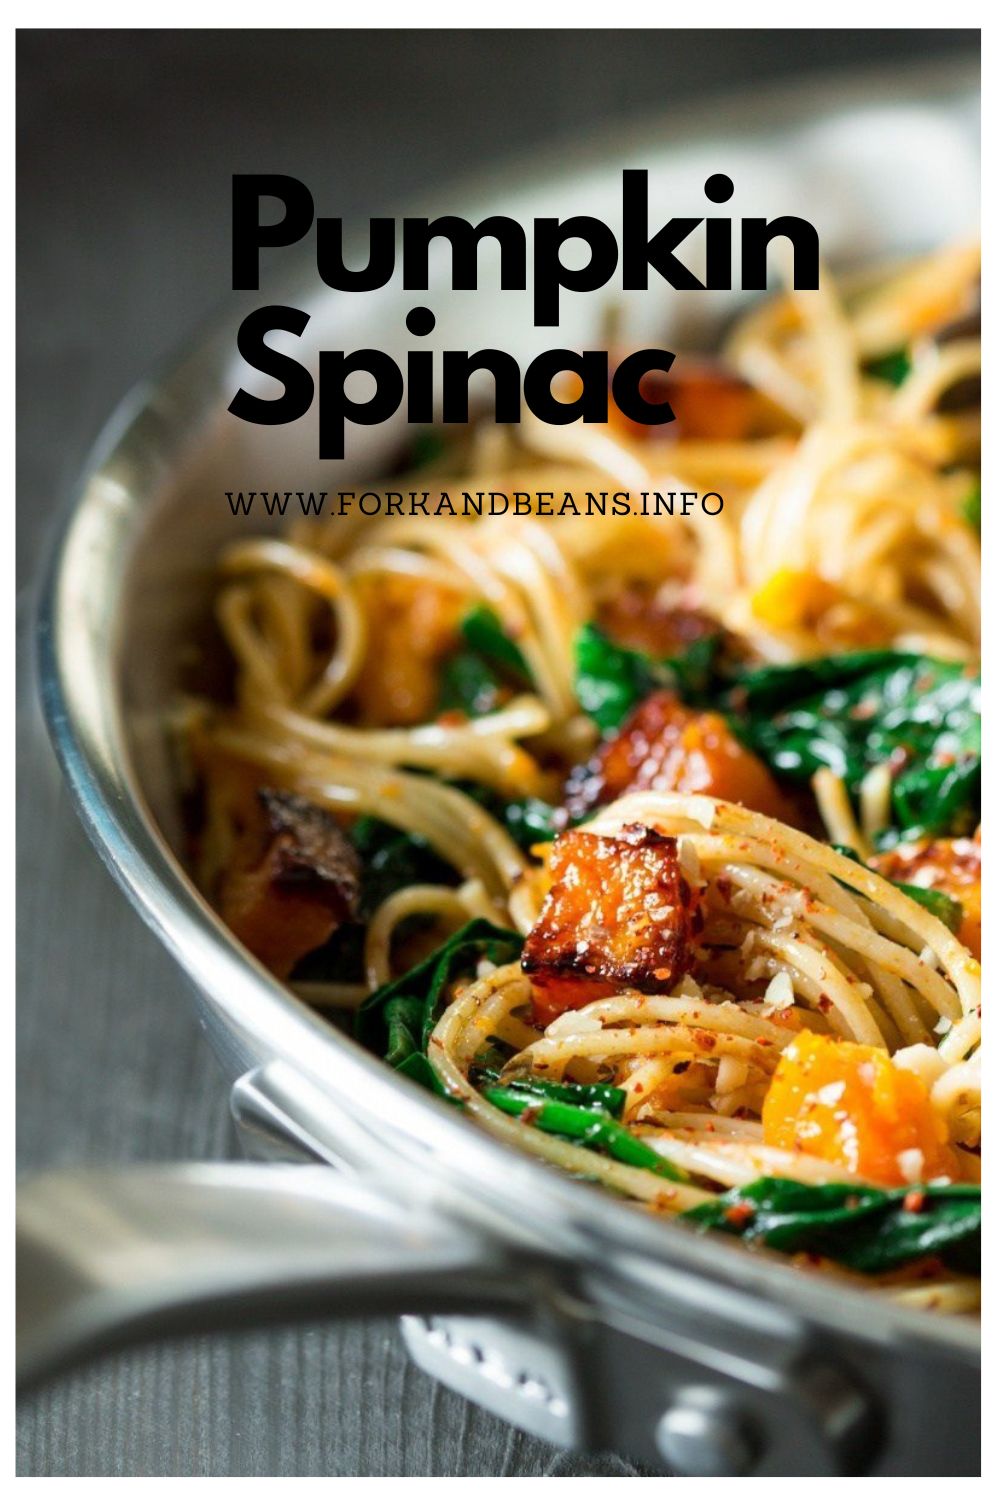 Pumpkin, spinach and walnut spaghetti